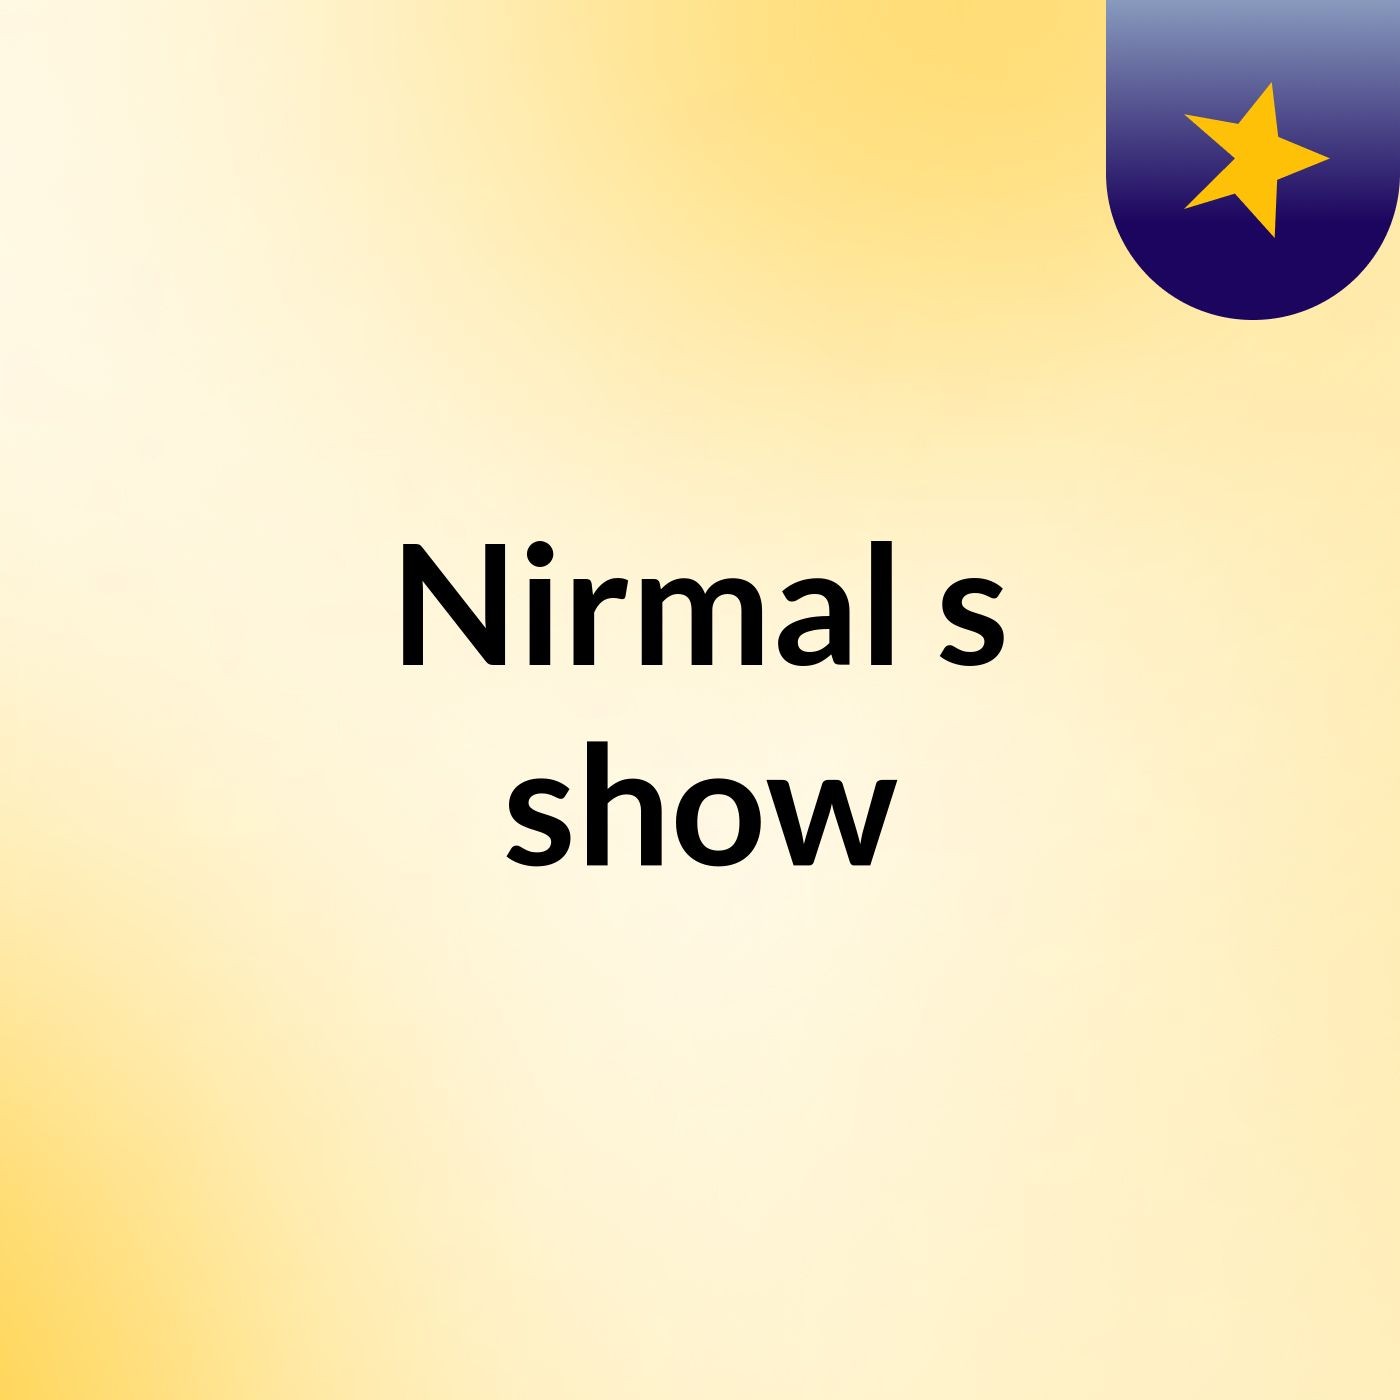 Nirmal's show